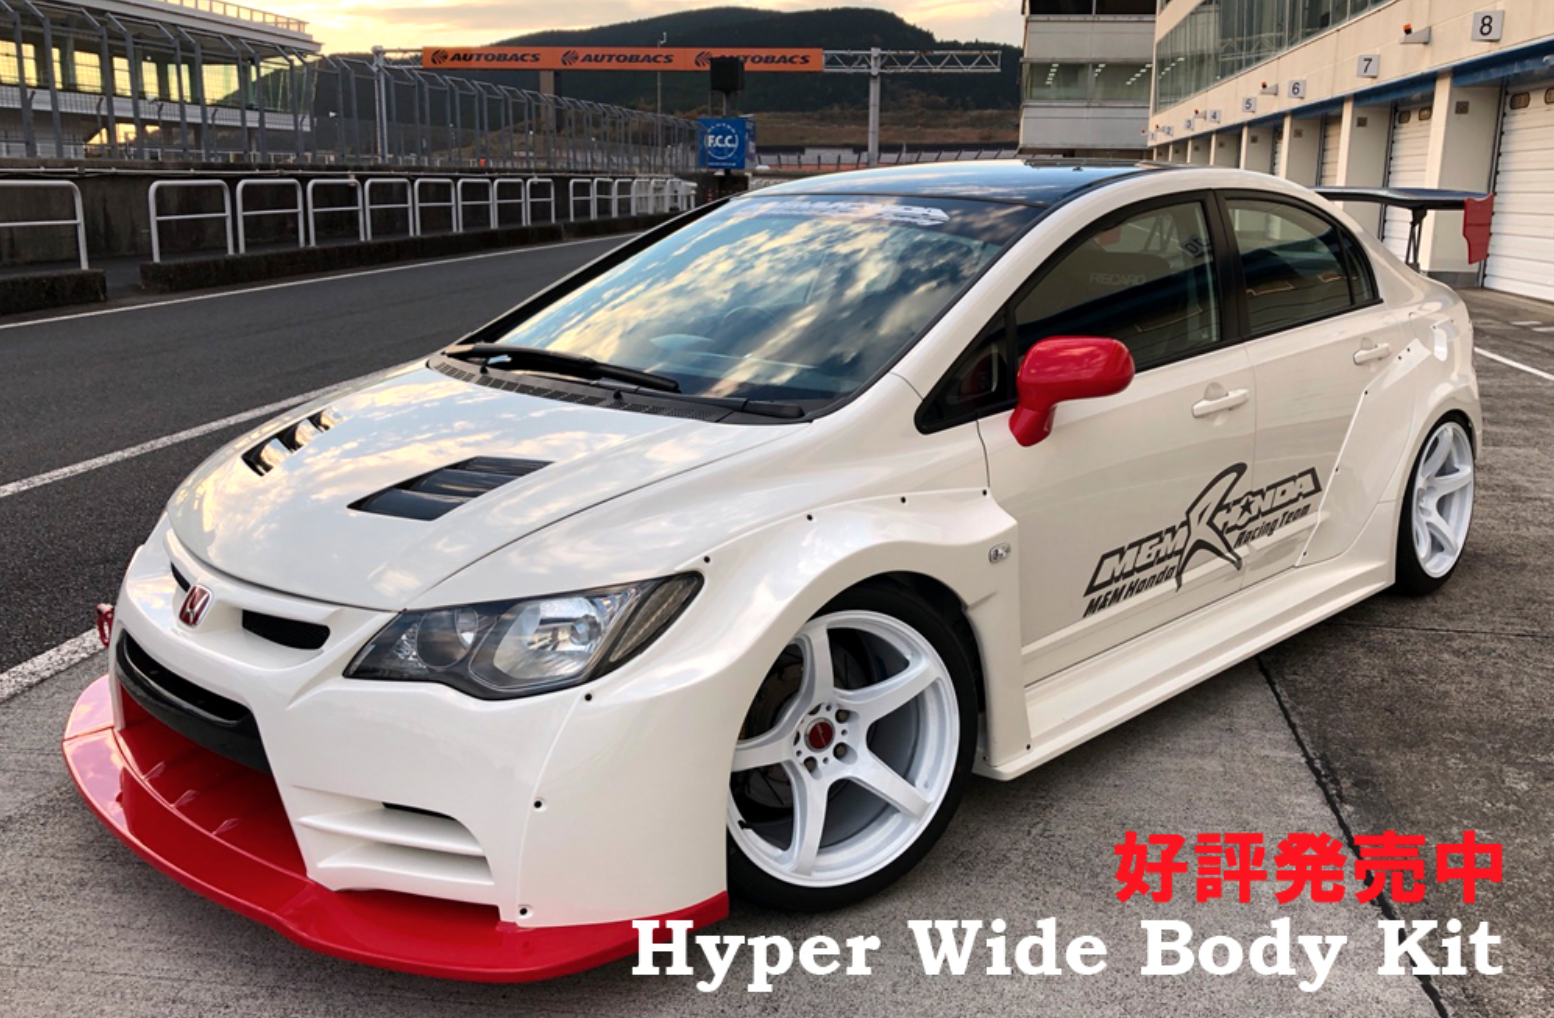 M And M Honda Hyper Wide Body Kit Type Mr01 Civic Fd2 Nengun Performance